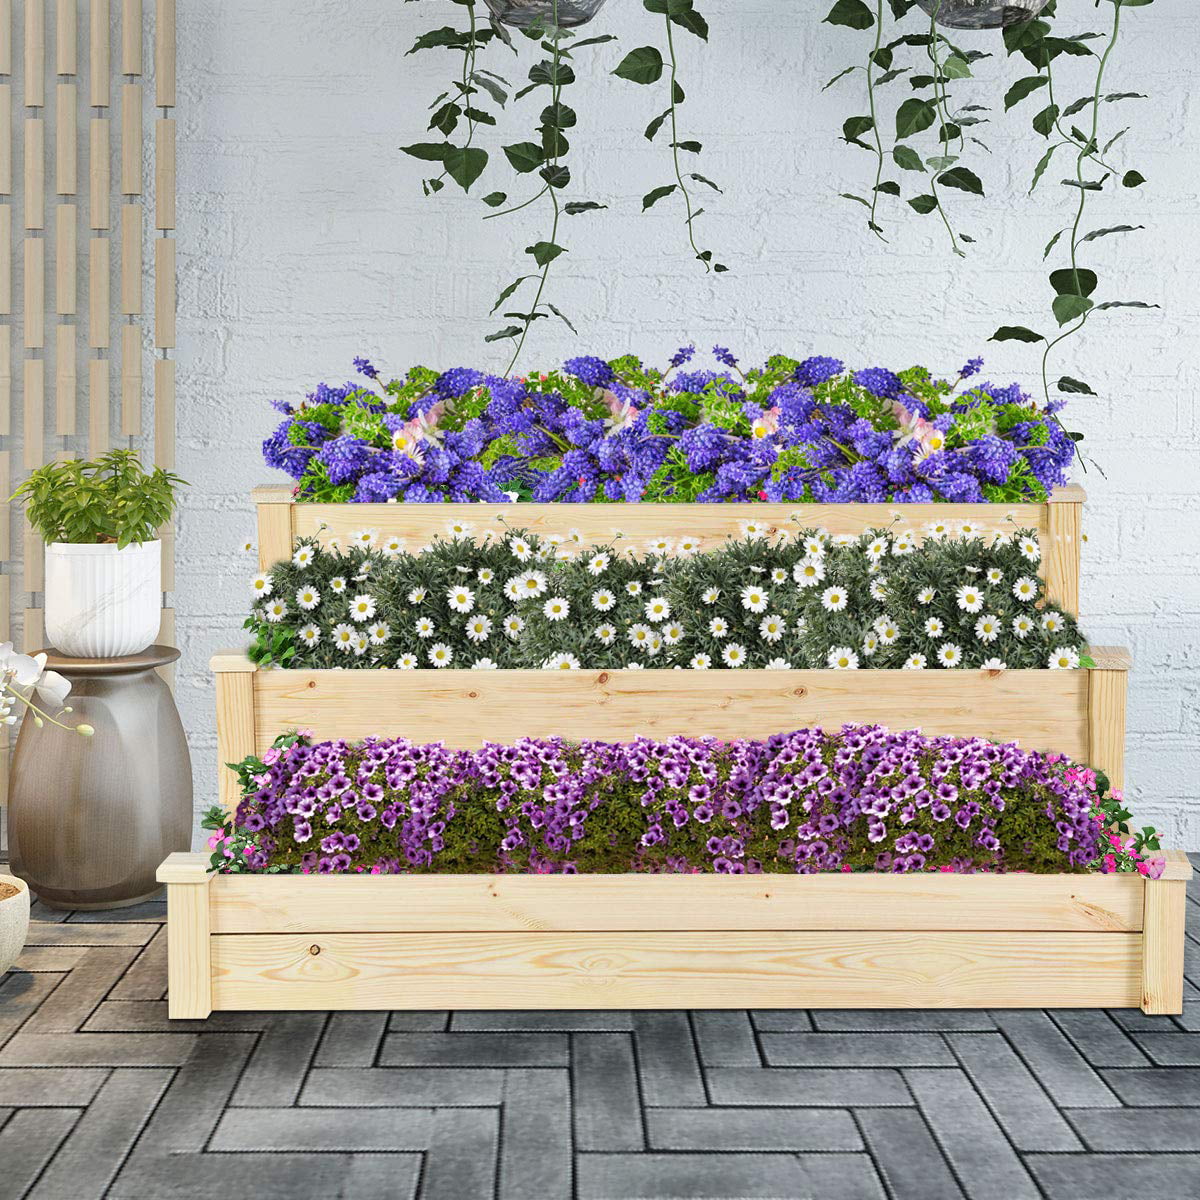 3 Tier Wooden Raised Elevated Garden Bed Planter Box Kit Flower